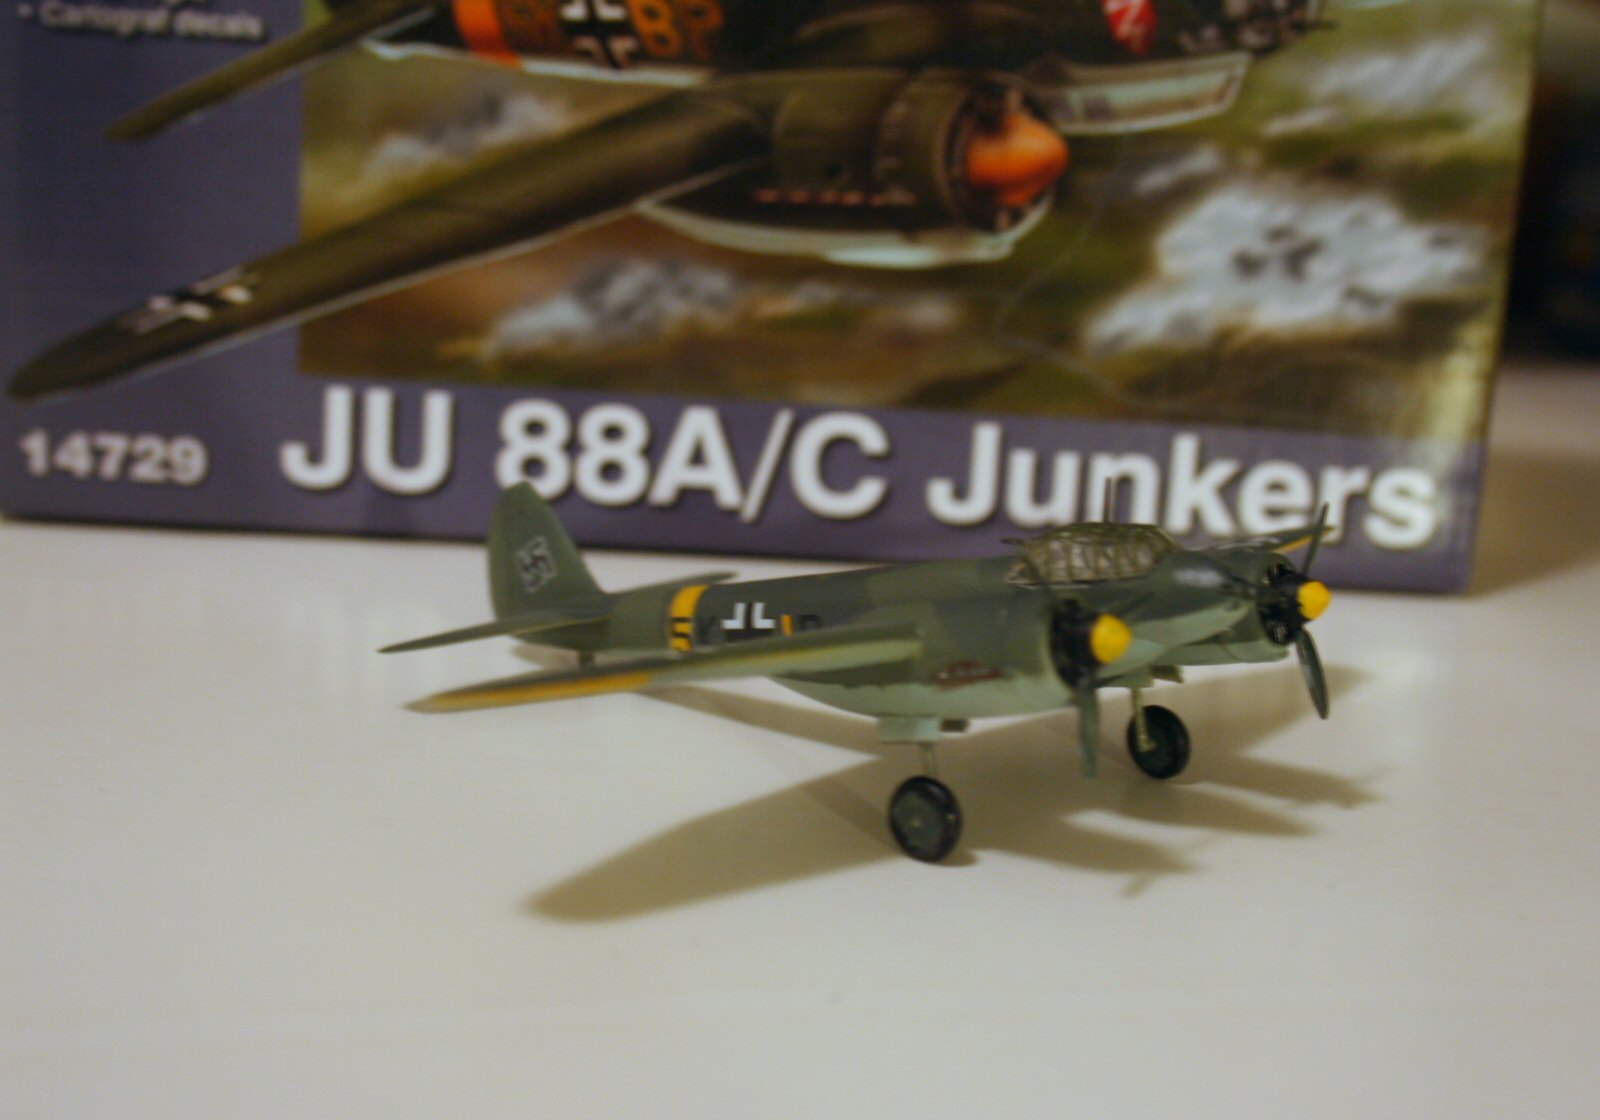 Ju-88A/C Junkers | IPMS/USA Reviews